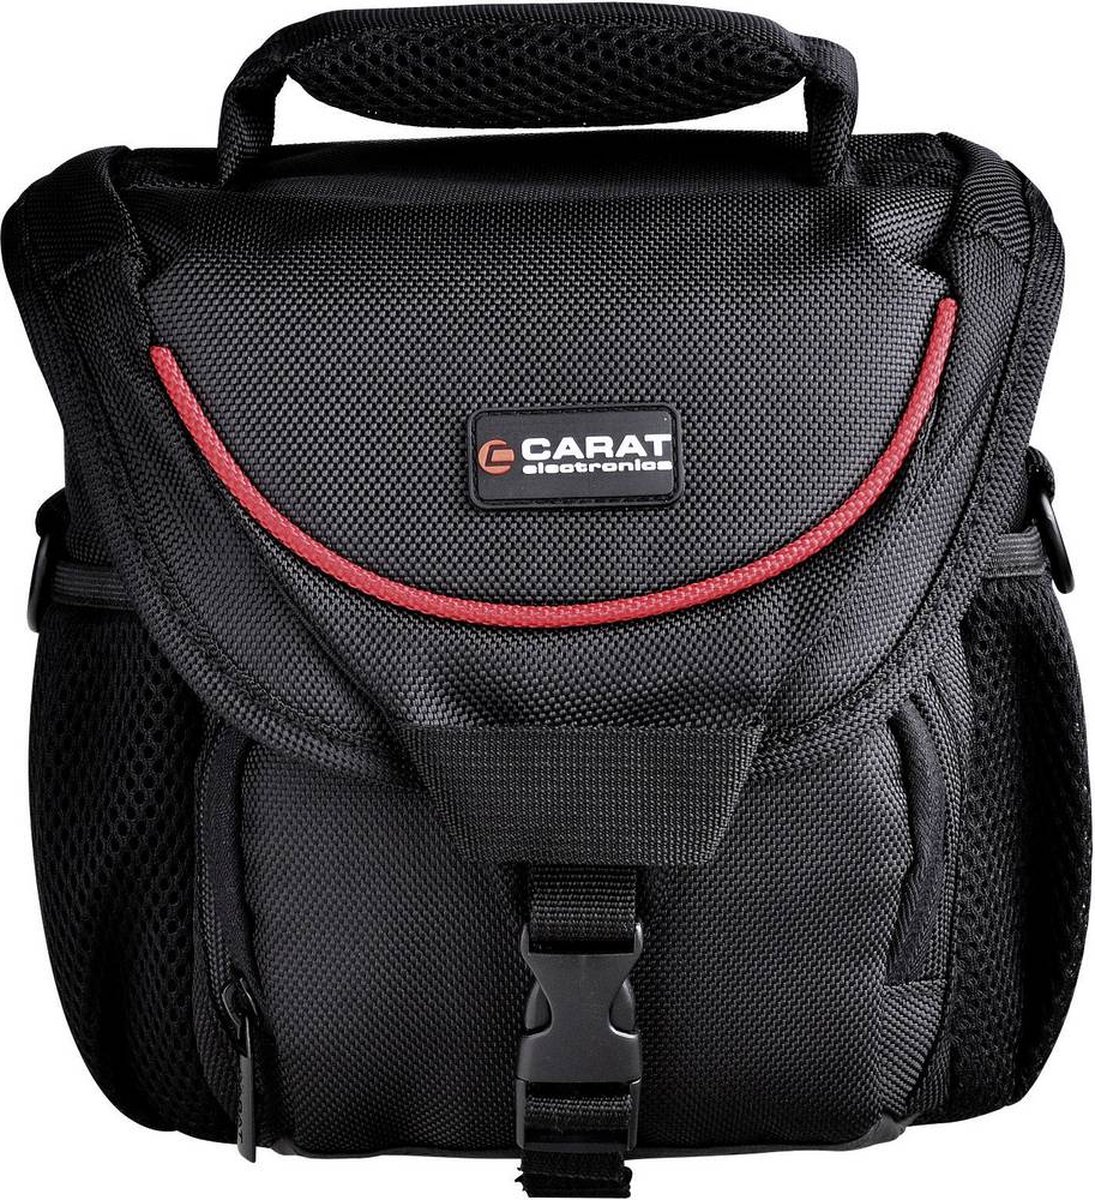 Carat Electronics Tough Bag Large Cameratas Binnenafmetingen (bxhxd) 160 x 80 x 140 mm